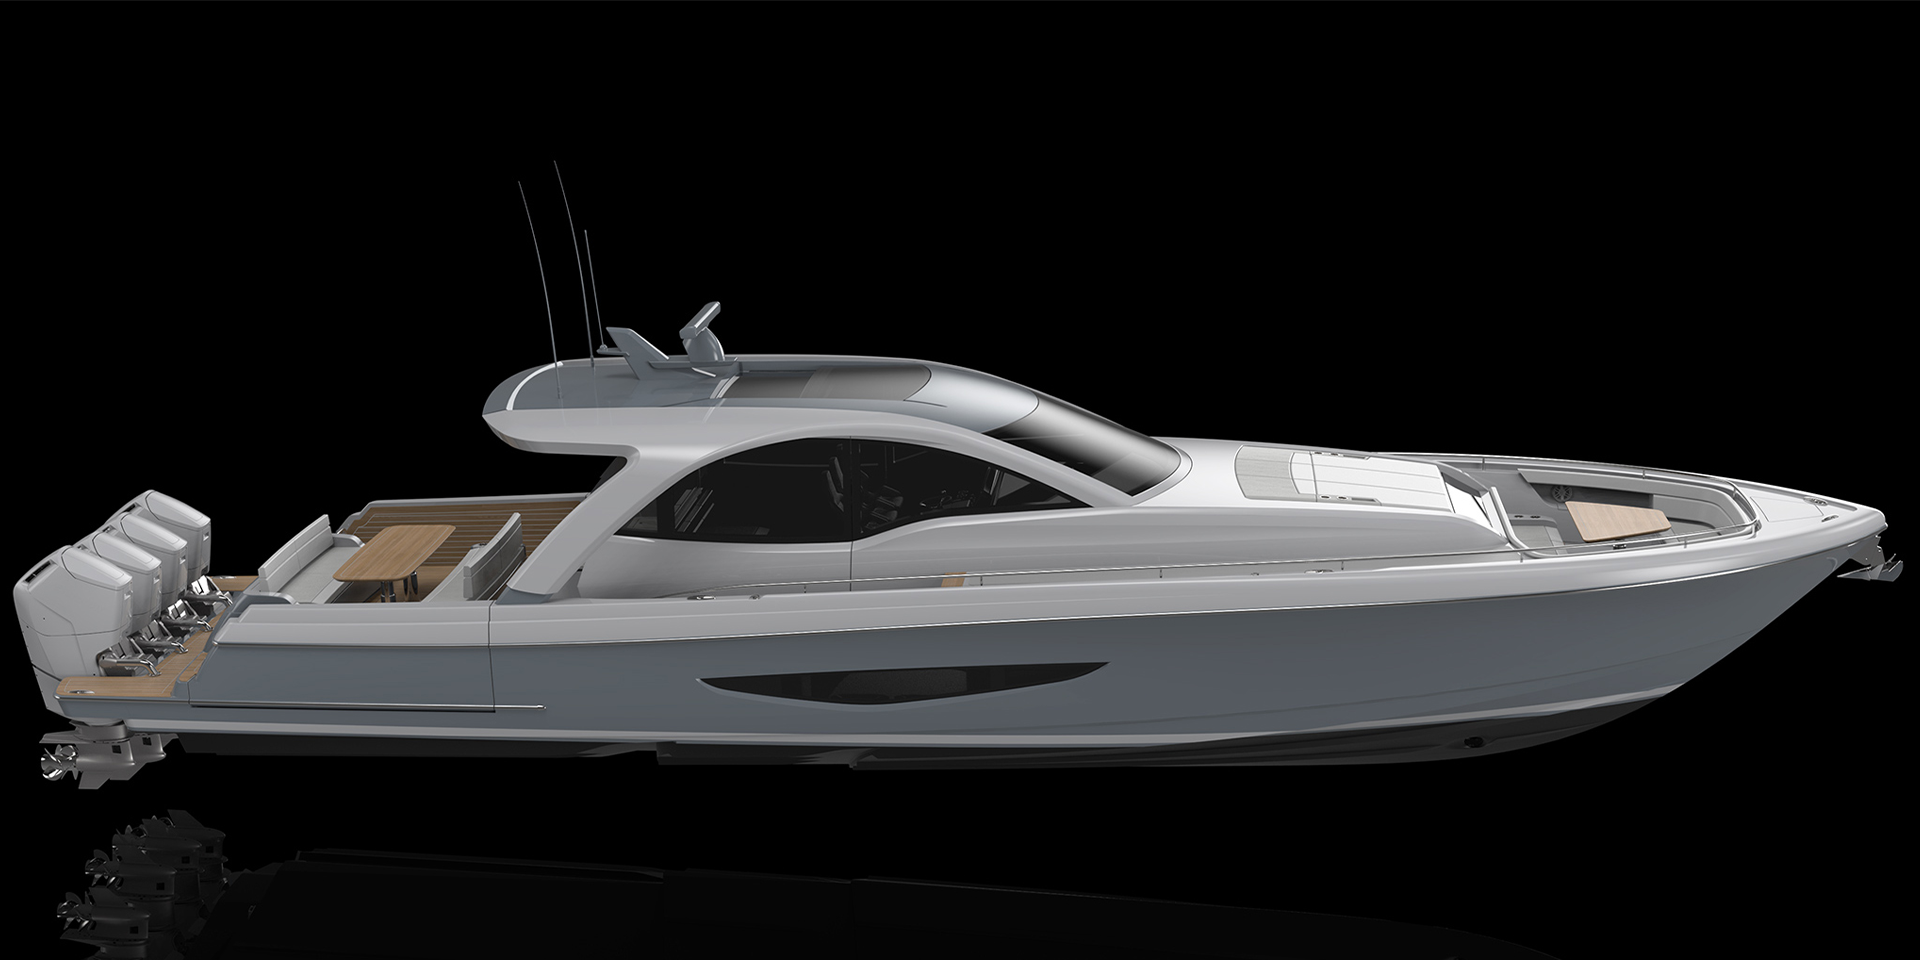 Valhalla Announces Luxury Cruising Yacht: Meet the V-55 Sport